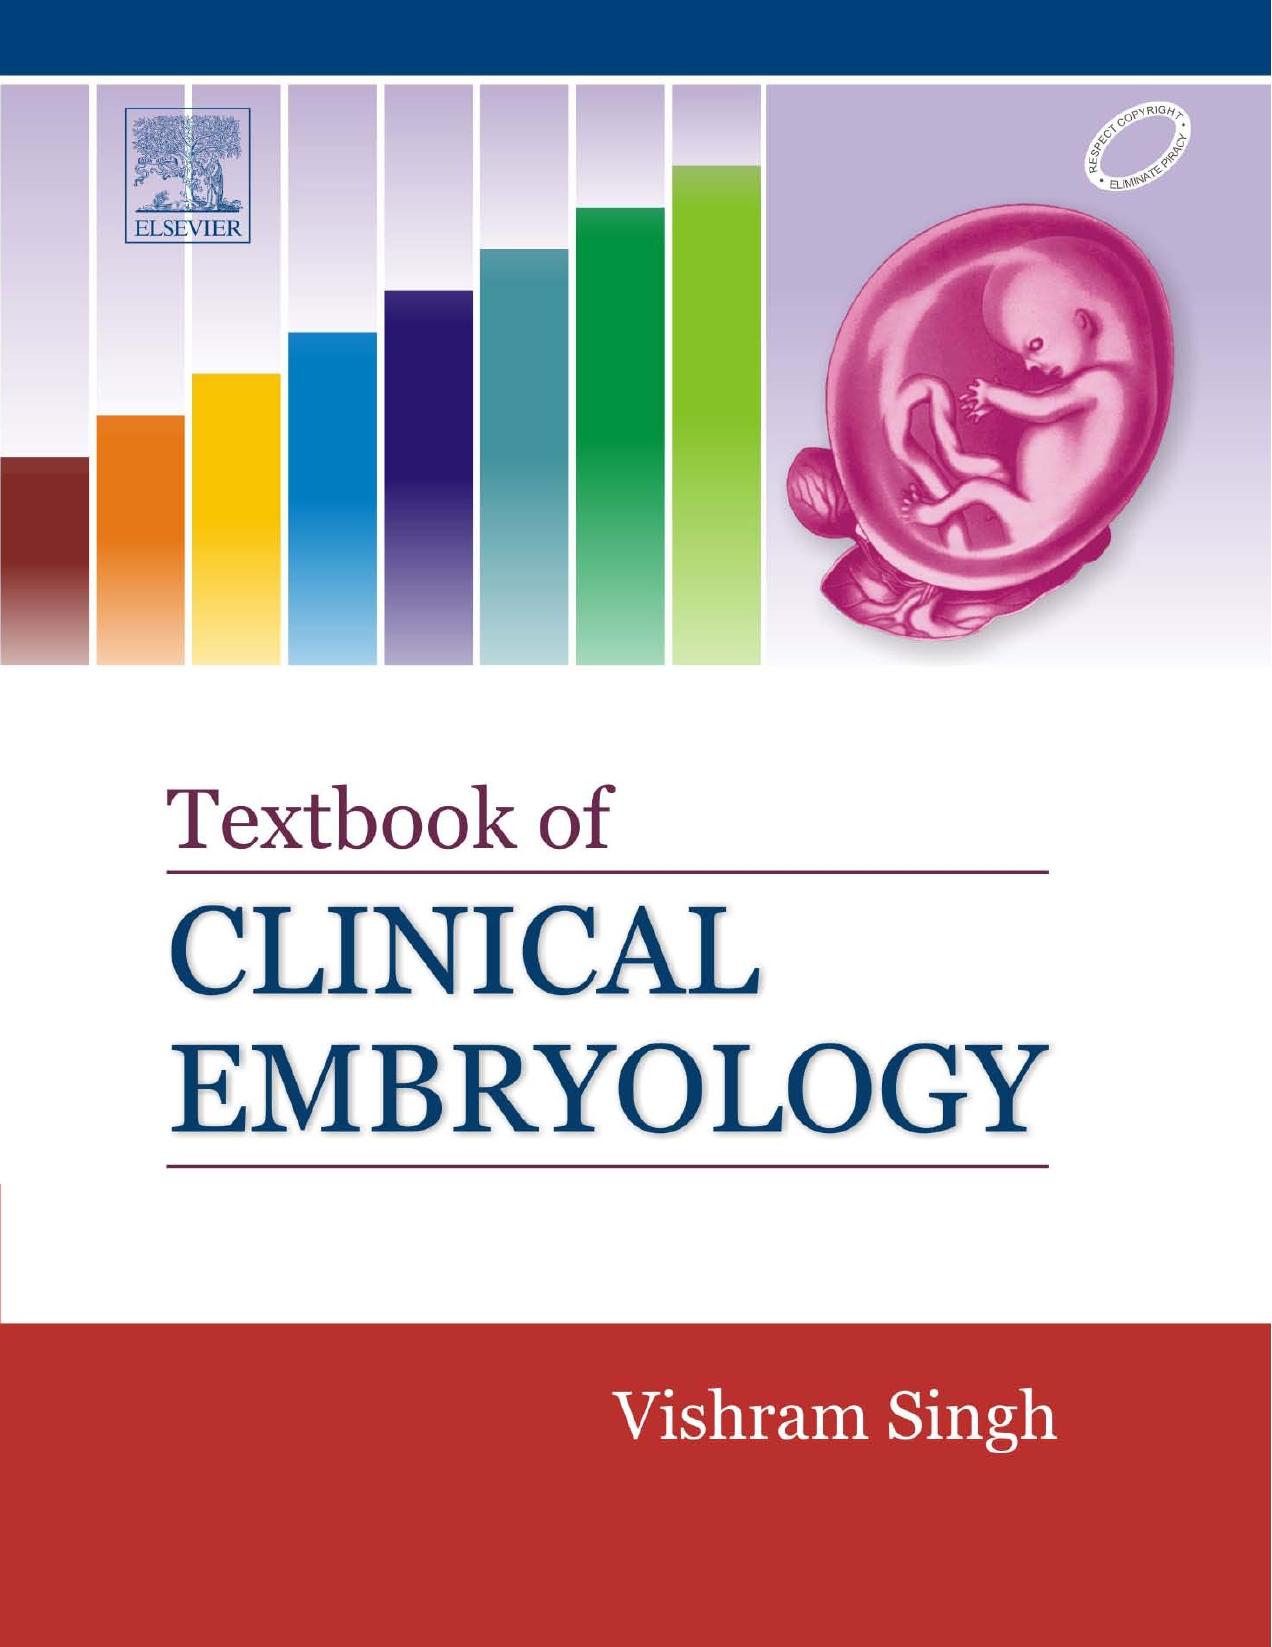 Textbook of Clinical Embryology Vishram Singh, ms 2012